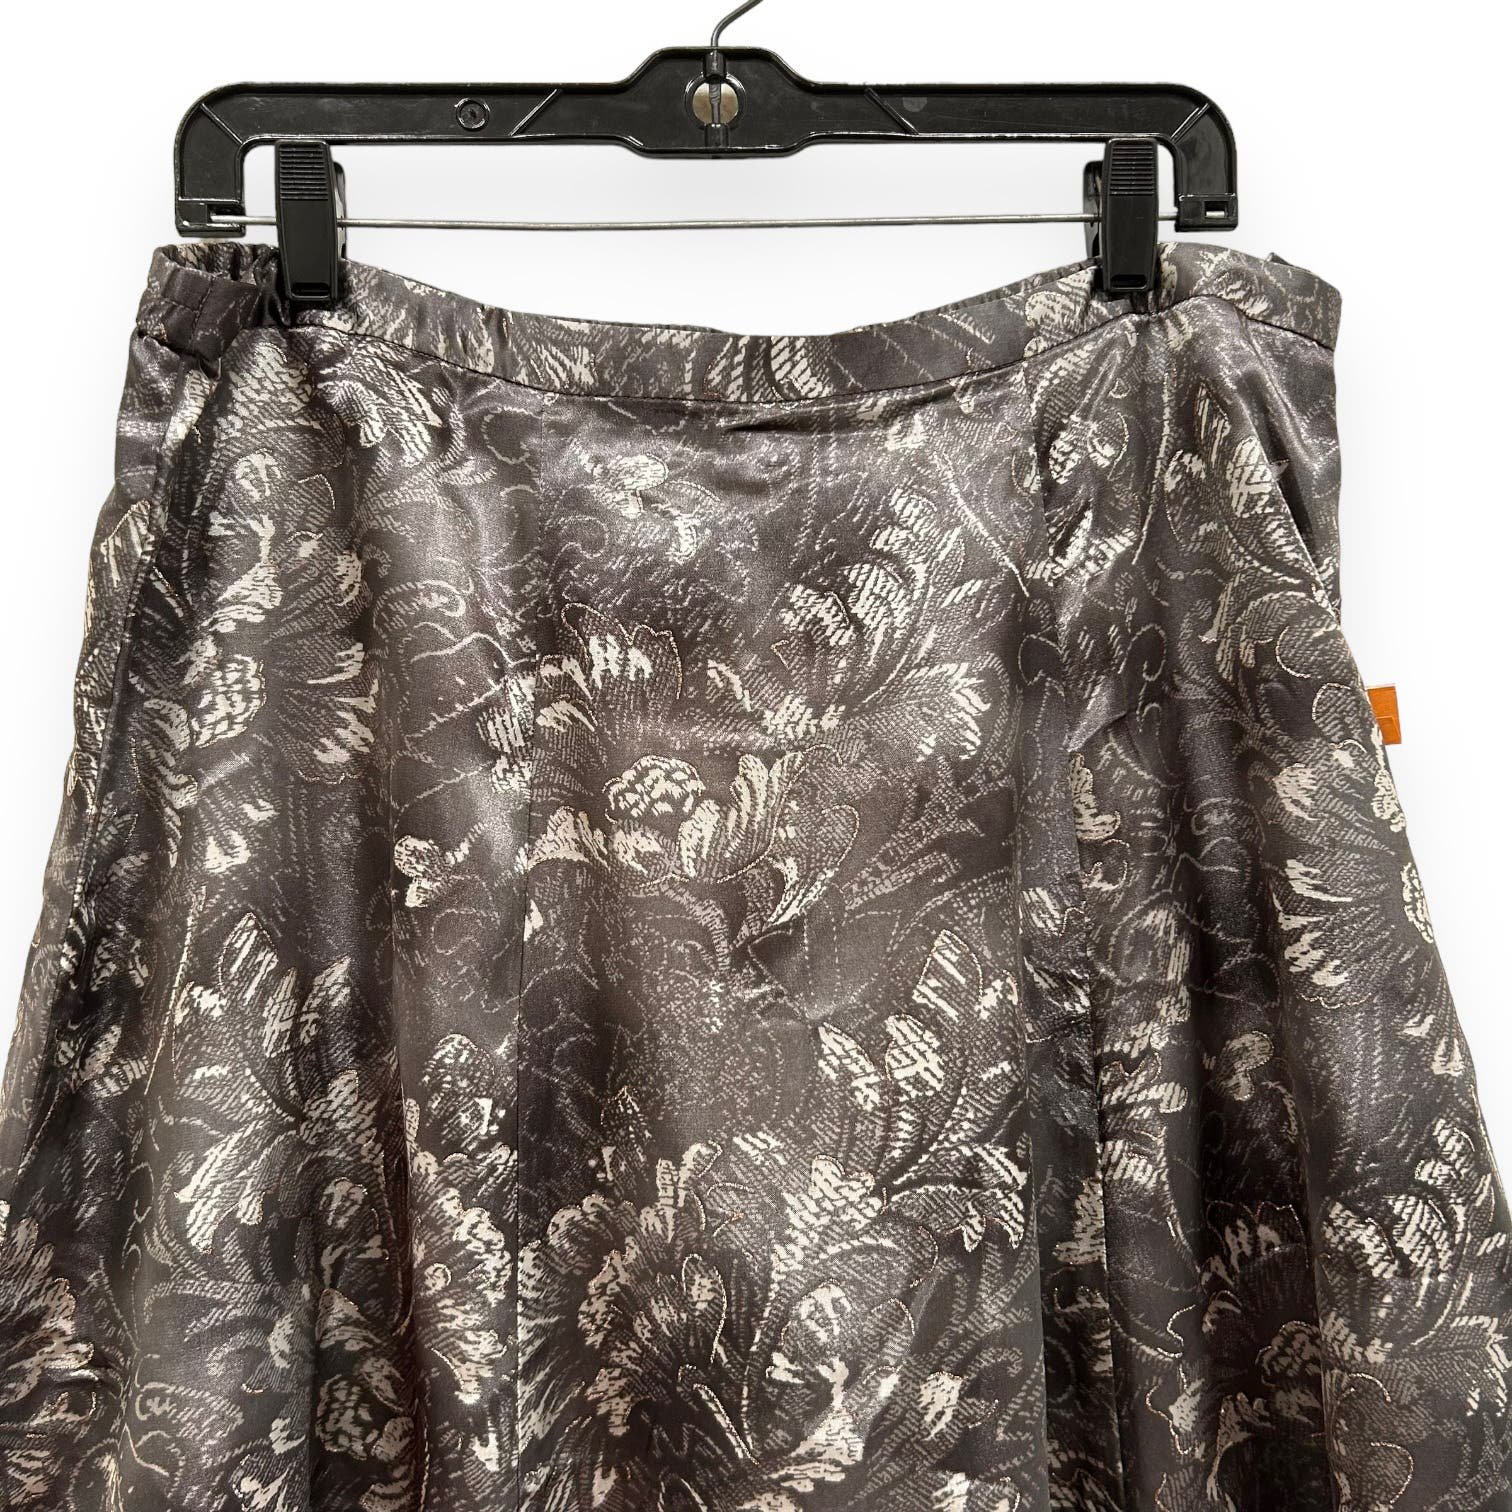 good price NWT Coldwater Creek Floral Shimmer Midi Skirt Size Medium kf5kDowxO online store